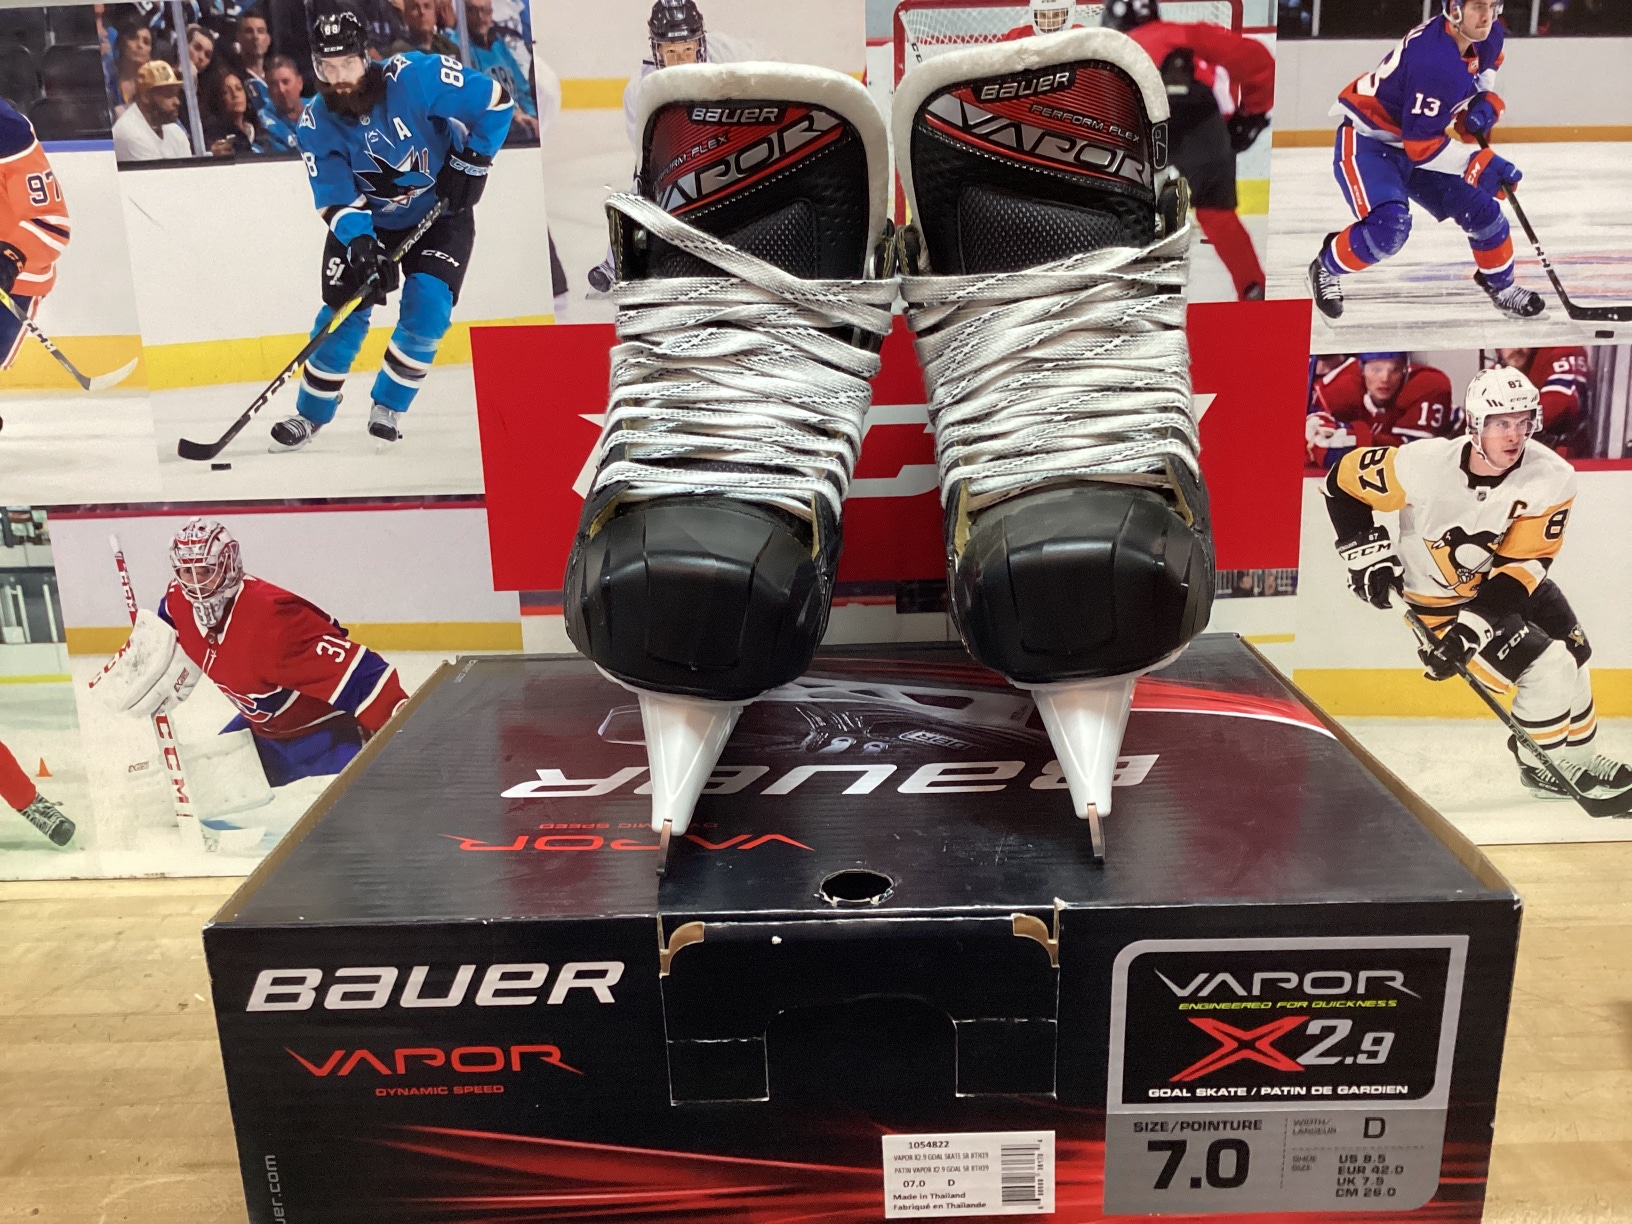 Senior New Bauer Vapor x 2.9 Hockey Skates Regular Width Size 7.0